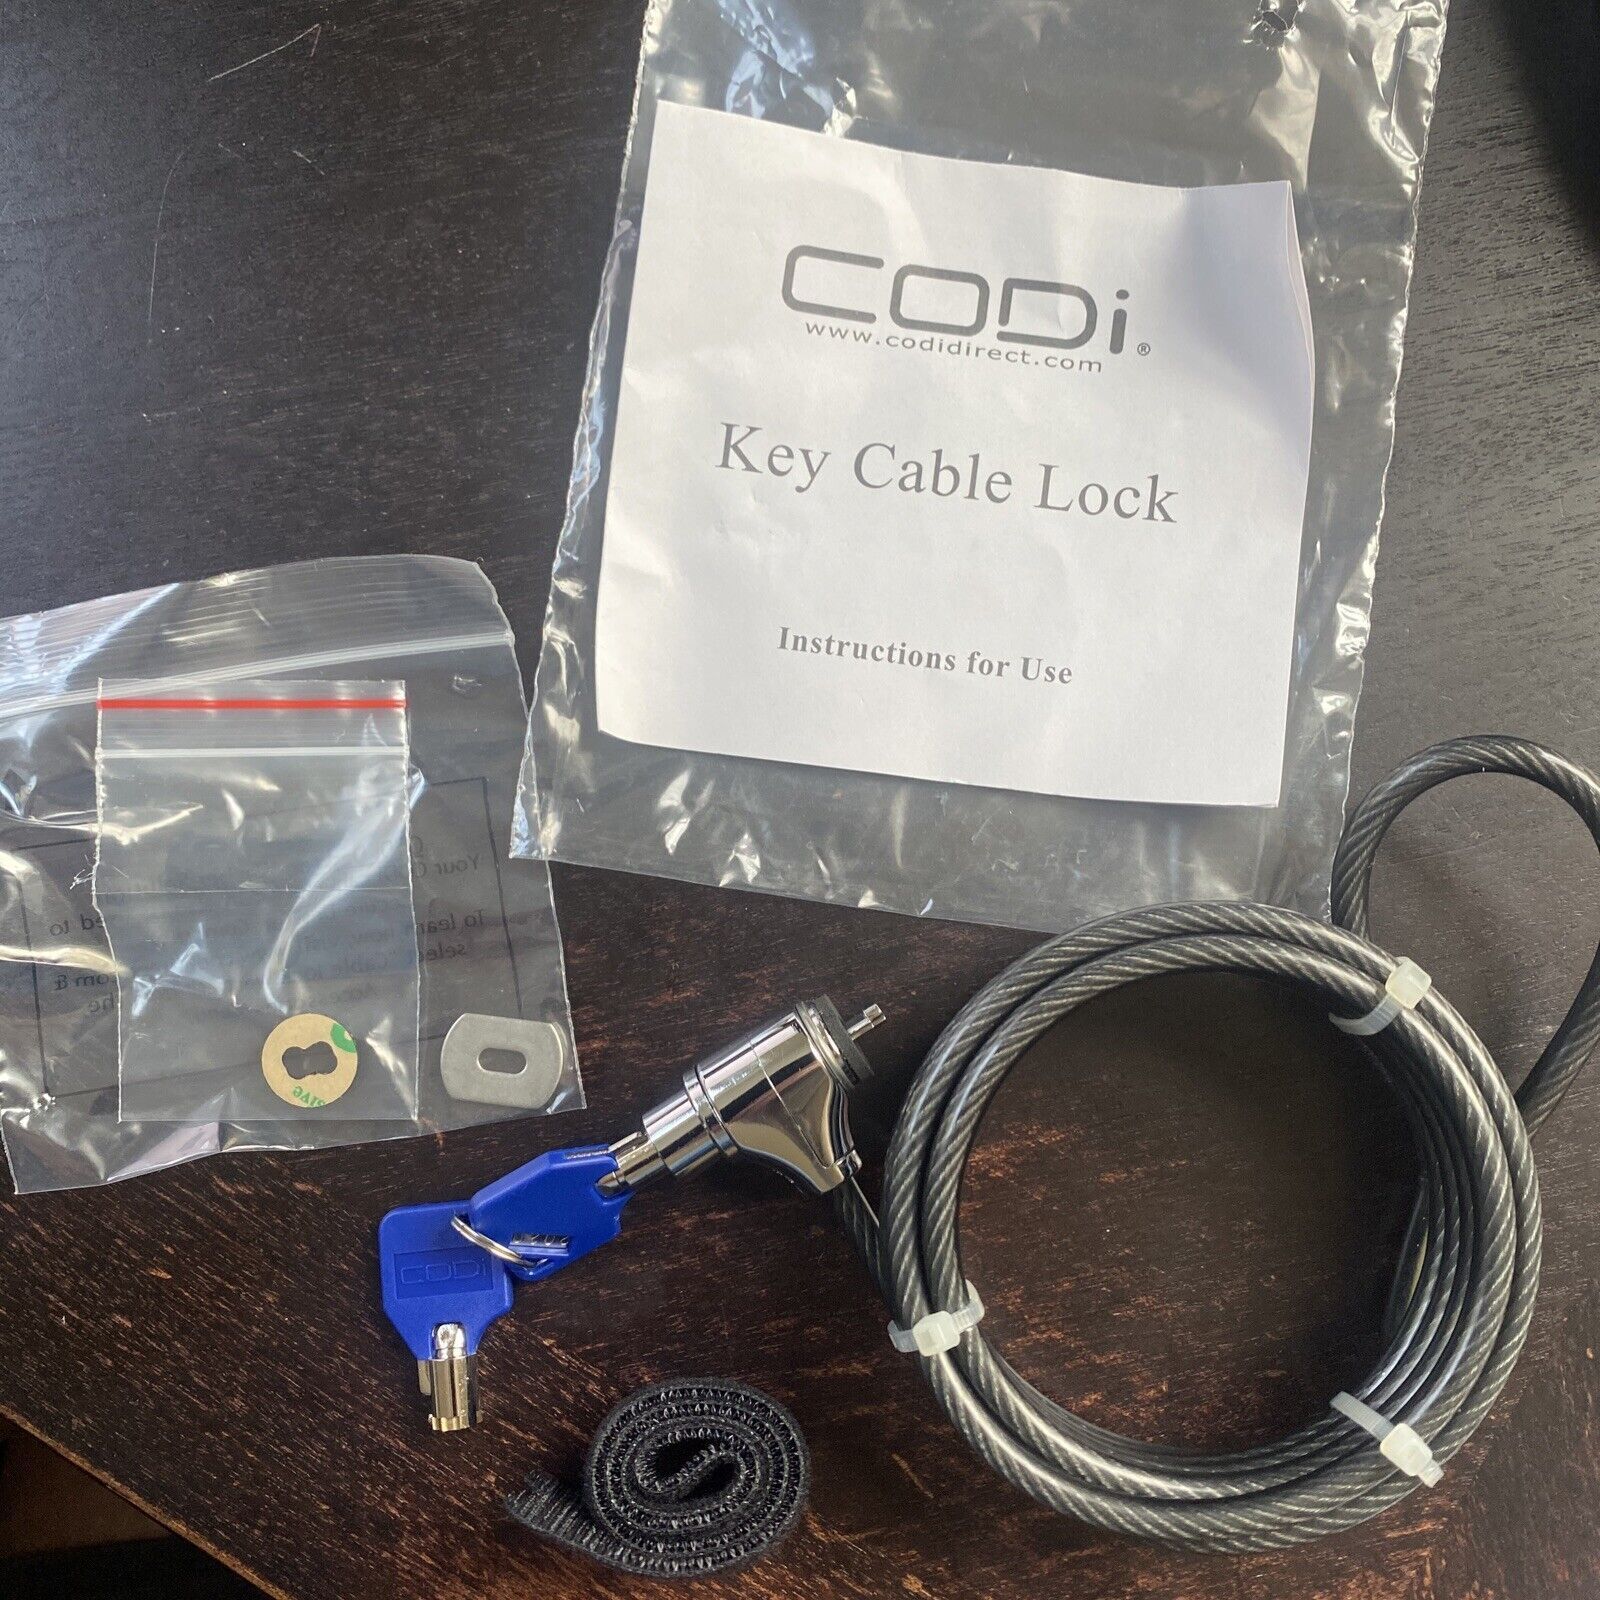 Codi Key Cable Lock w/Two Keys 6.5 feet length Brand New